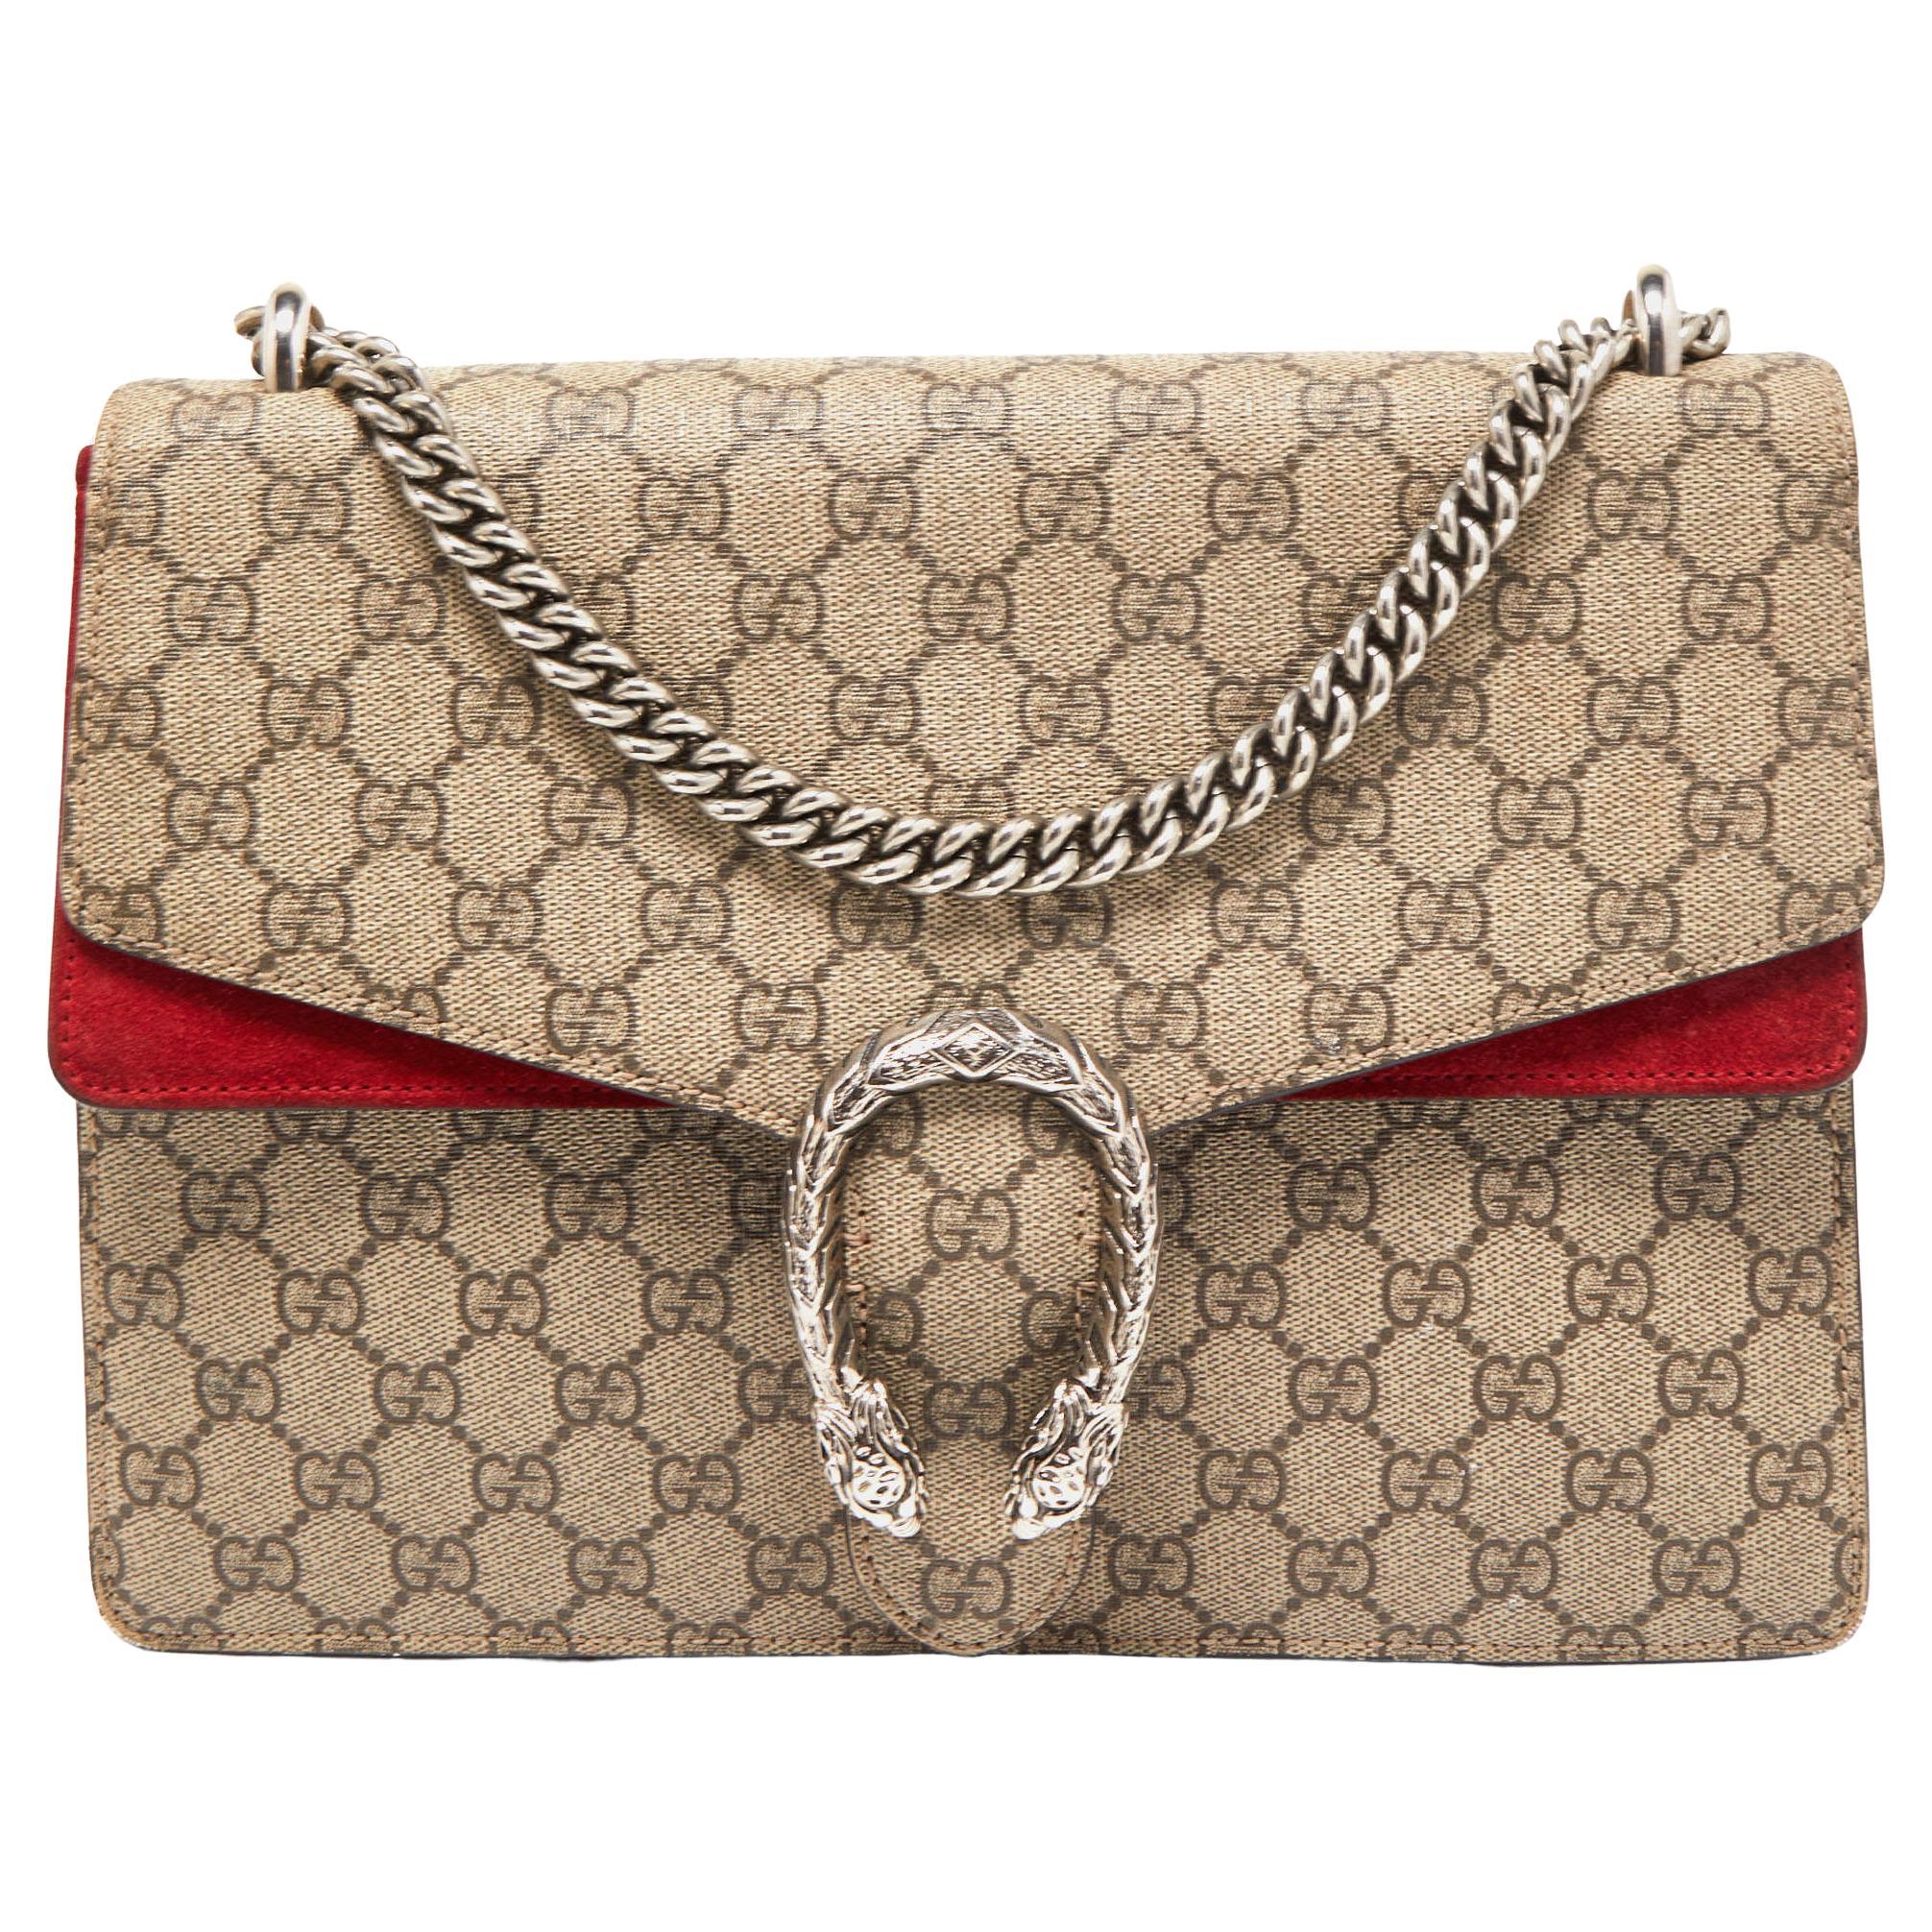 Gucci Beige/Red GG Supreme Canvas and Suede Medium Dionysus Shoulder Bag